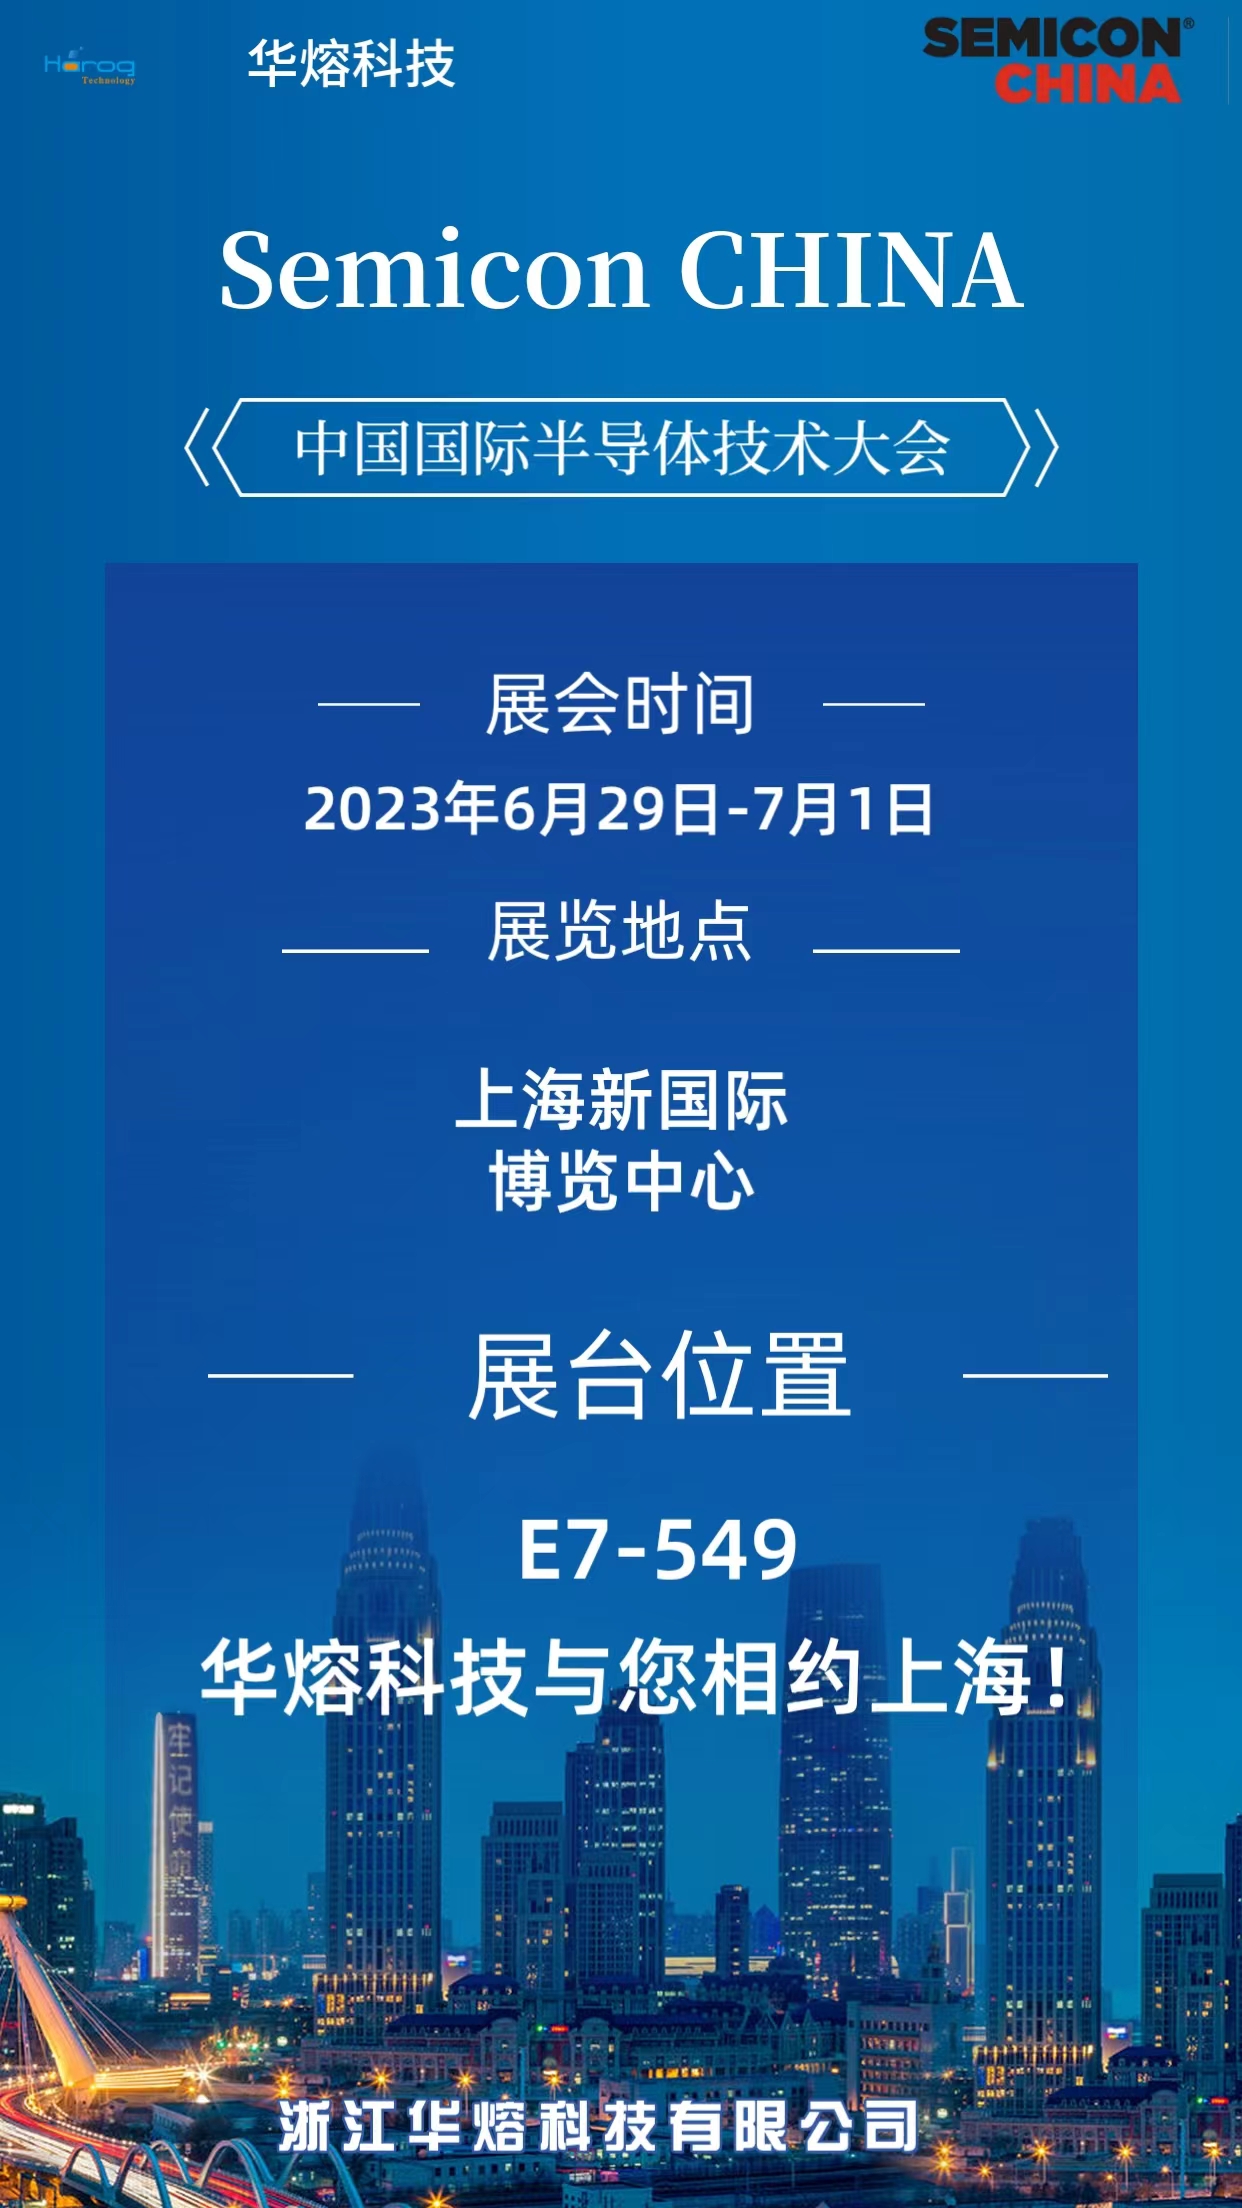 Harog Technology will Exhibit at Semicon China 2023 E7-569